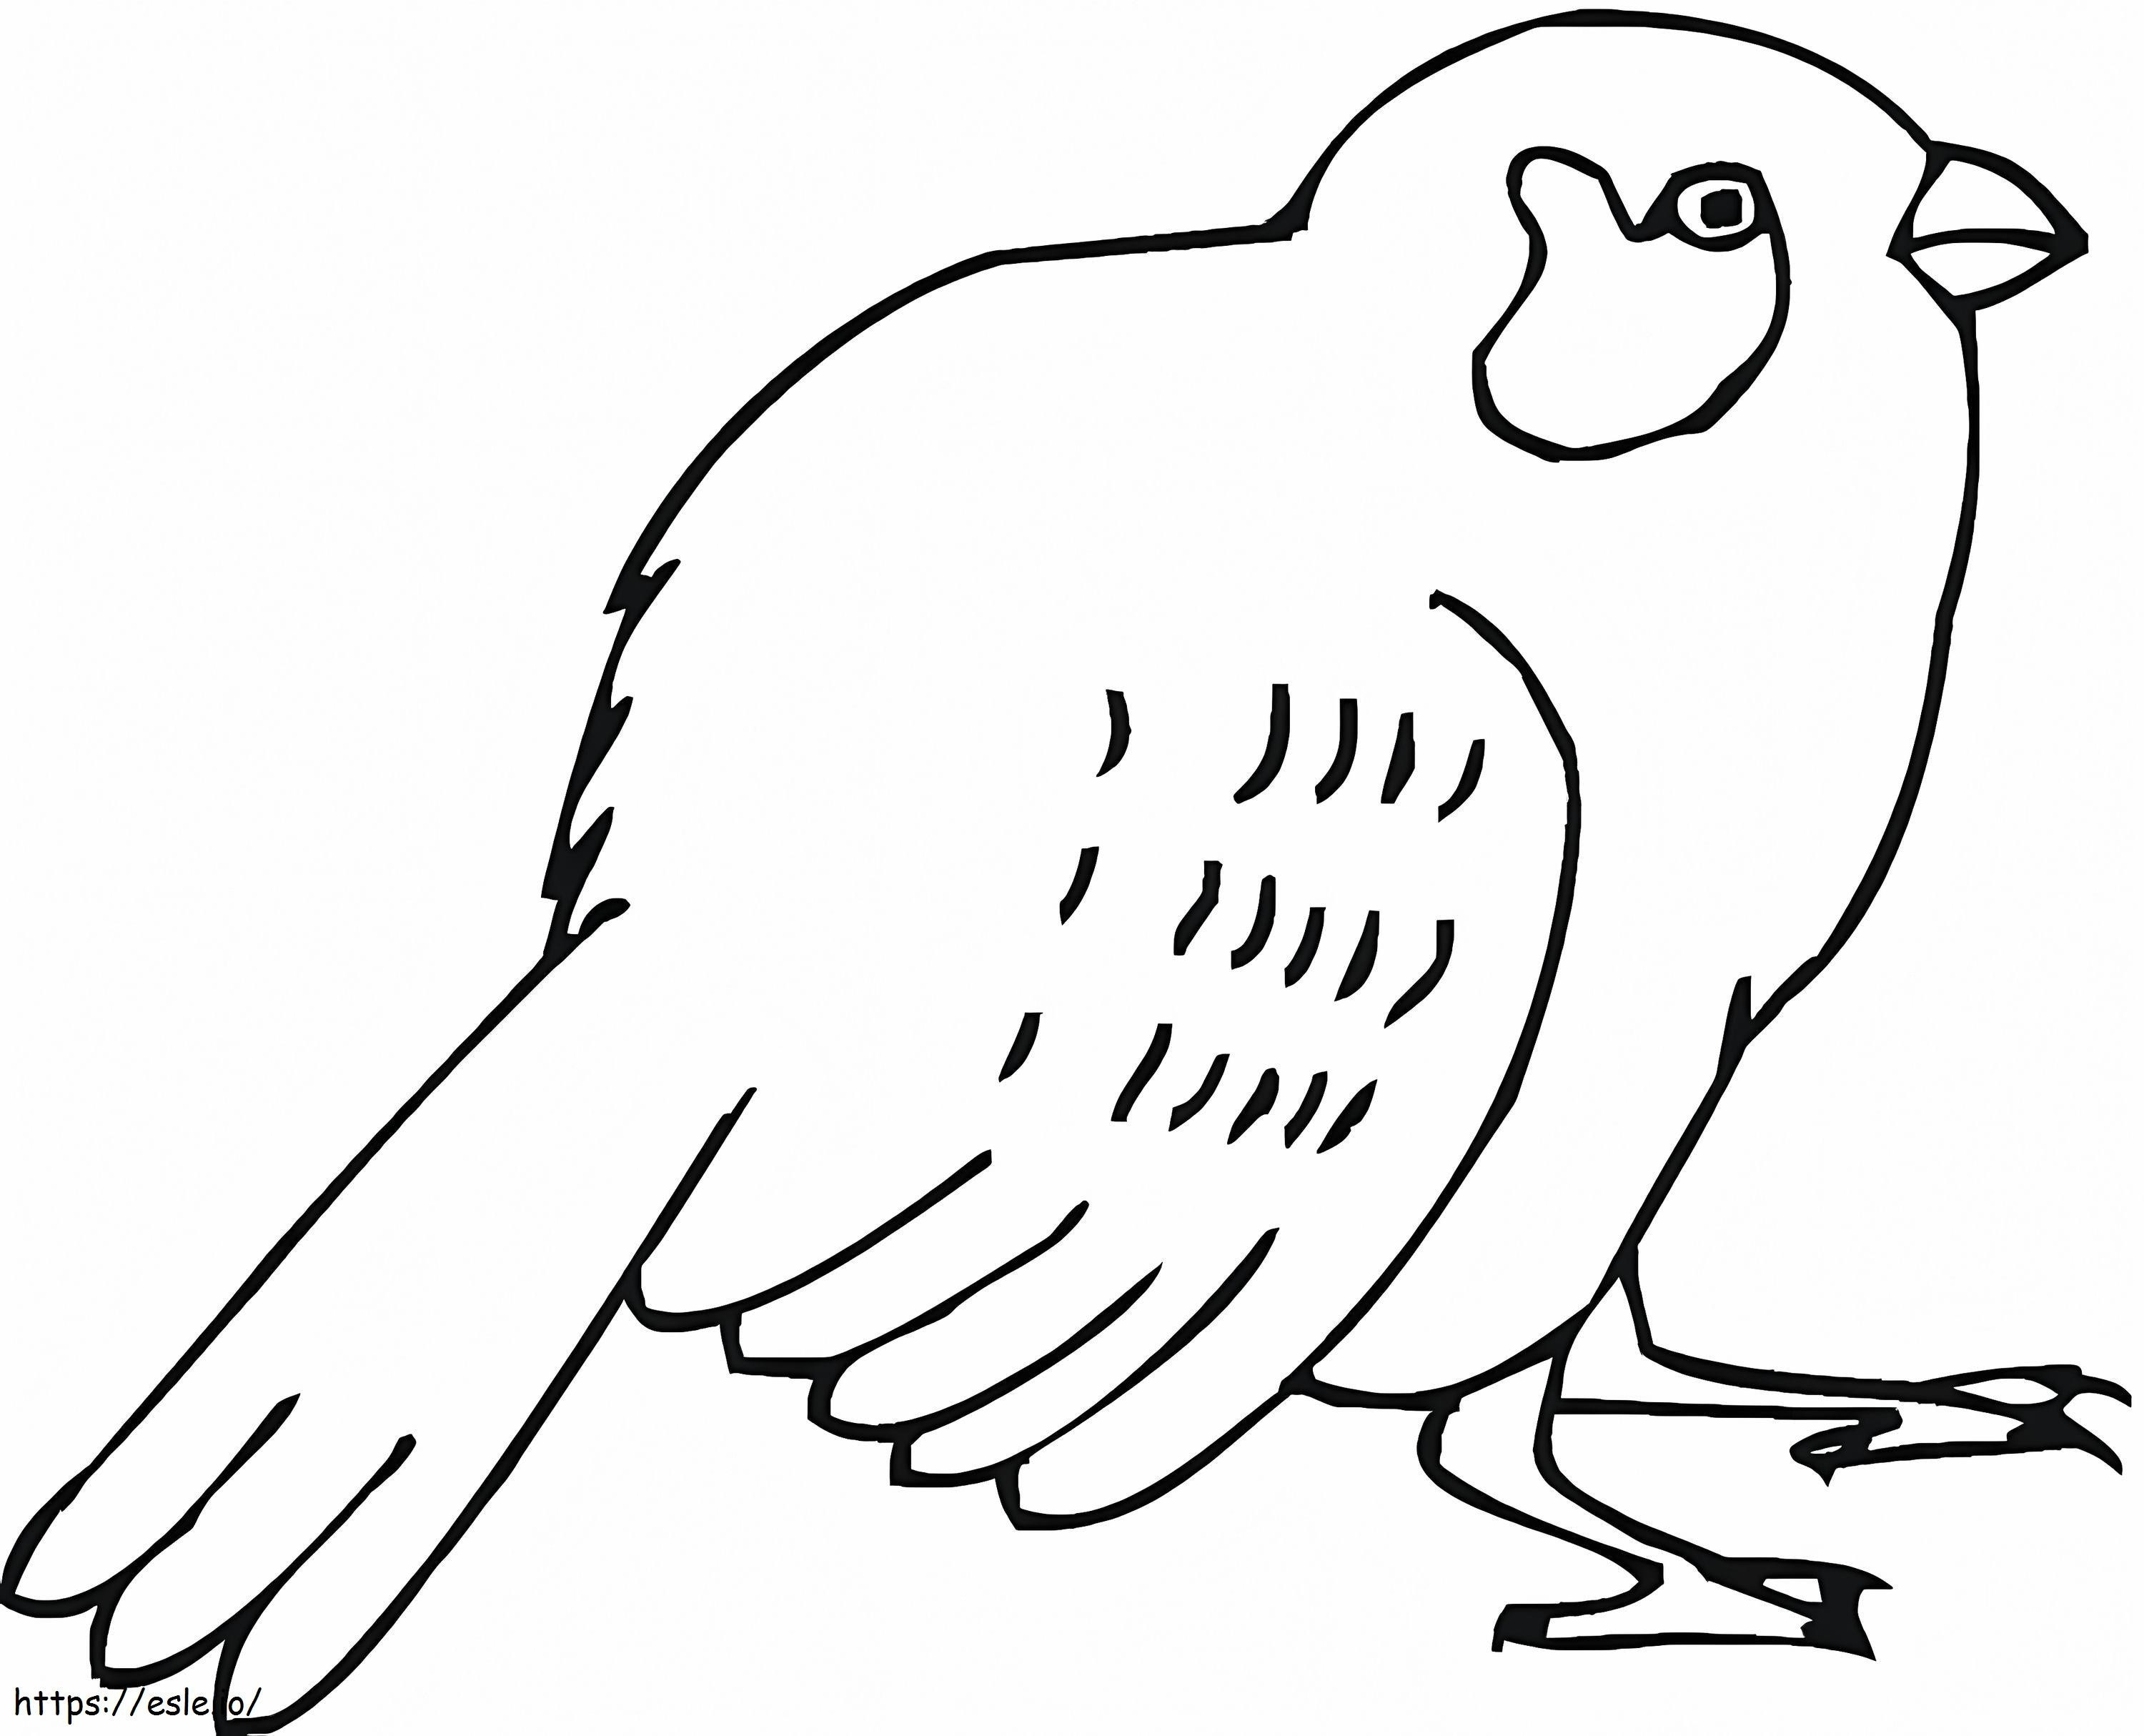 Printable Sparrow coloring page